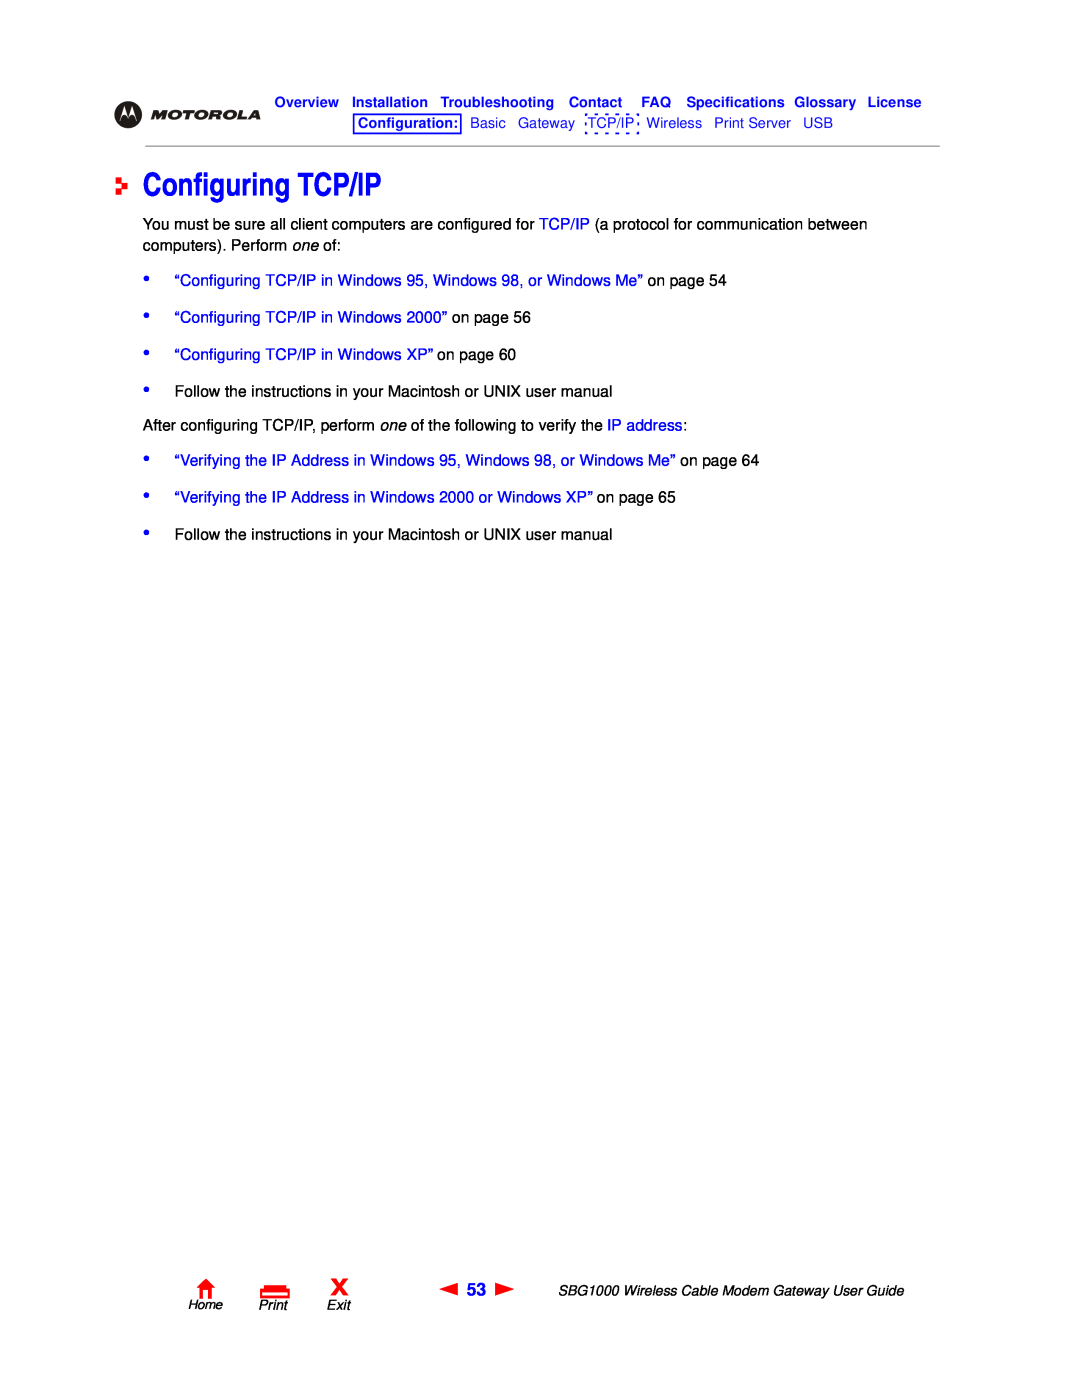 Motorola SBG1000 manual “Configuring TCP/IP in Windows 95, Windows 98, or Windows Me” on page 